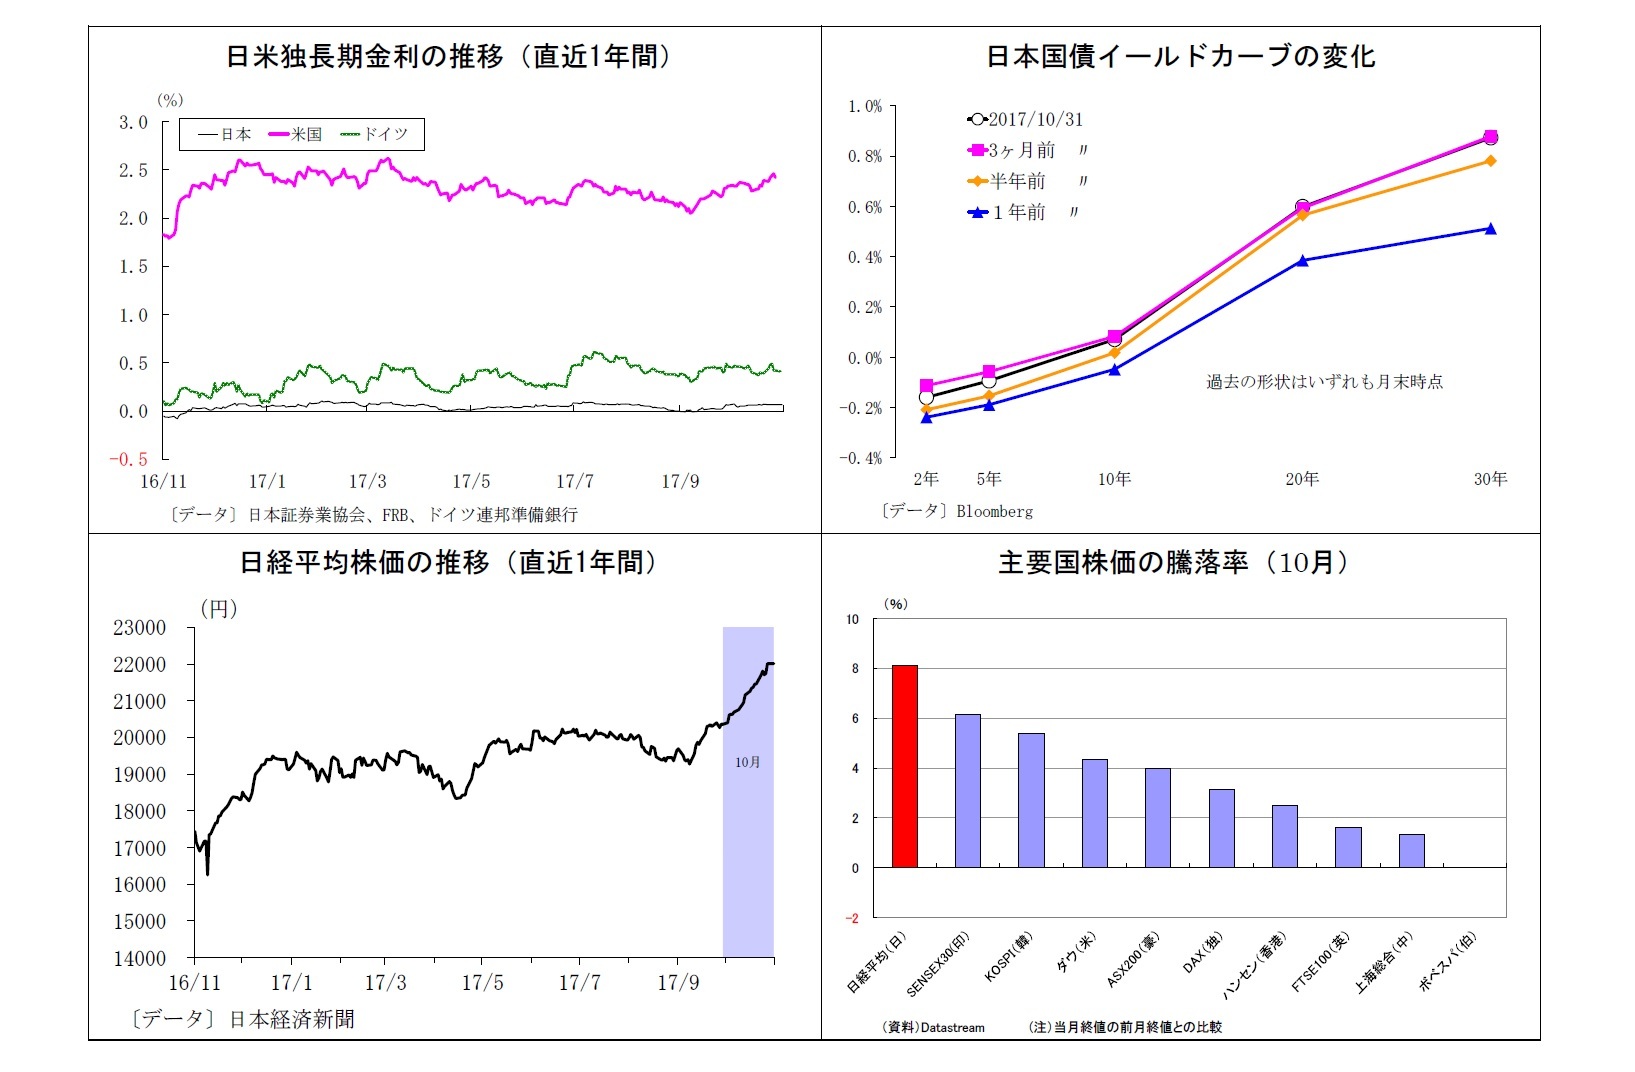 日米独長期金利の推移（直近1年間）/日本国債イールドカーブの変化/日経平均株価の推移（直近1年間）/主要国株価の騰落率（10月）